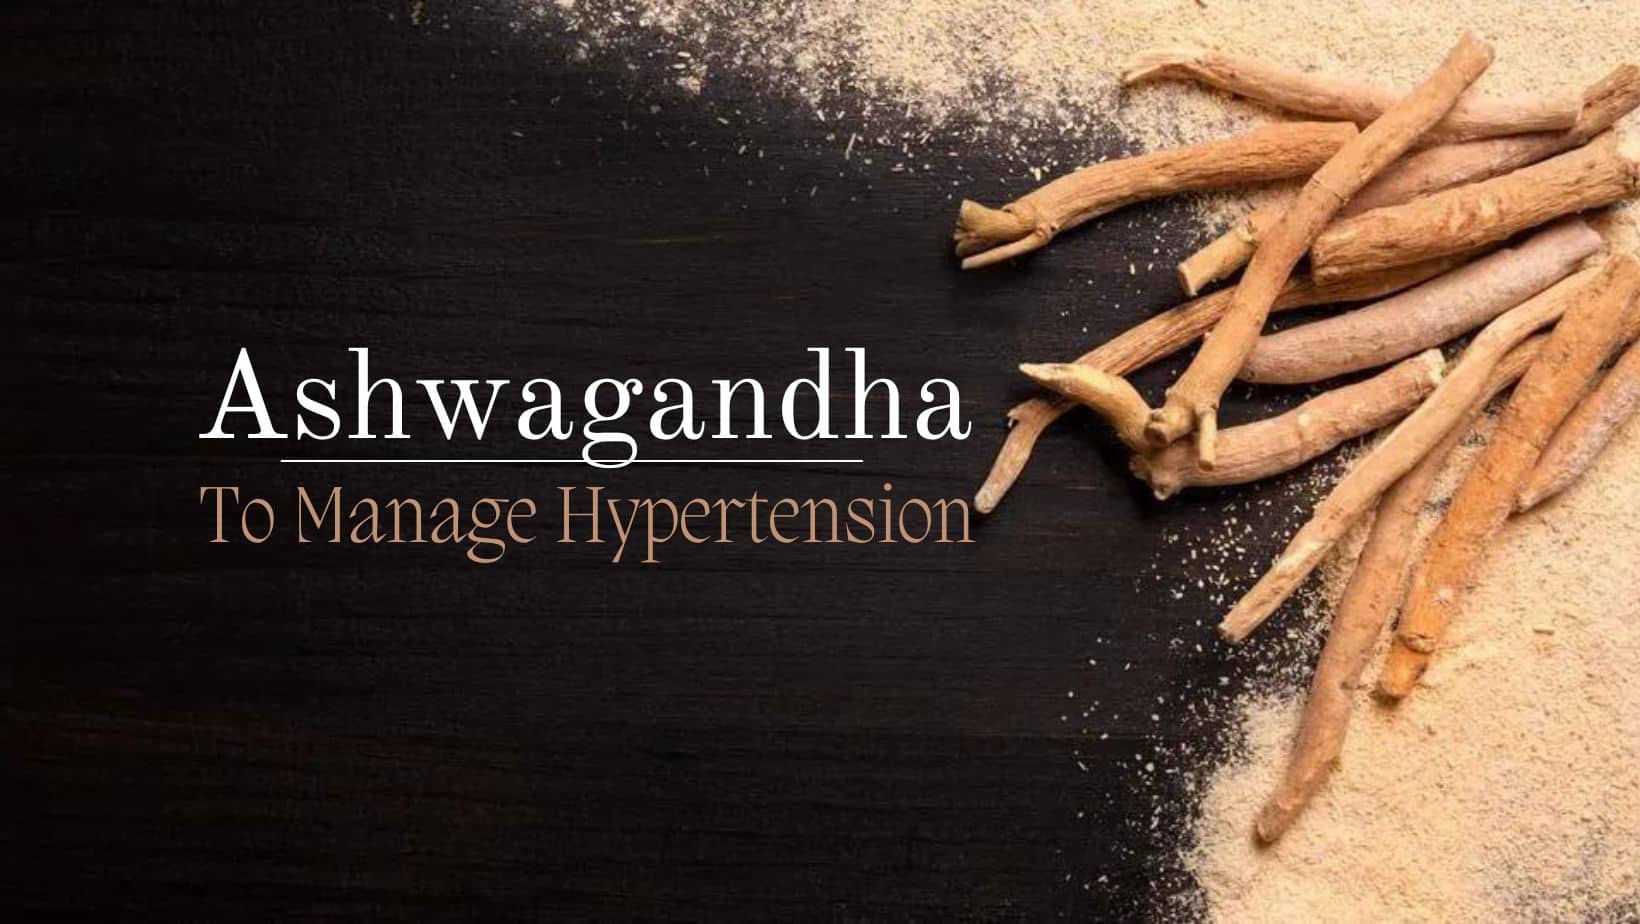 Ashwagandha For High Blood Pressure: How To Manage Hypertension With Ashwagandha